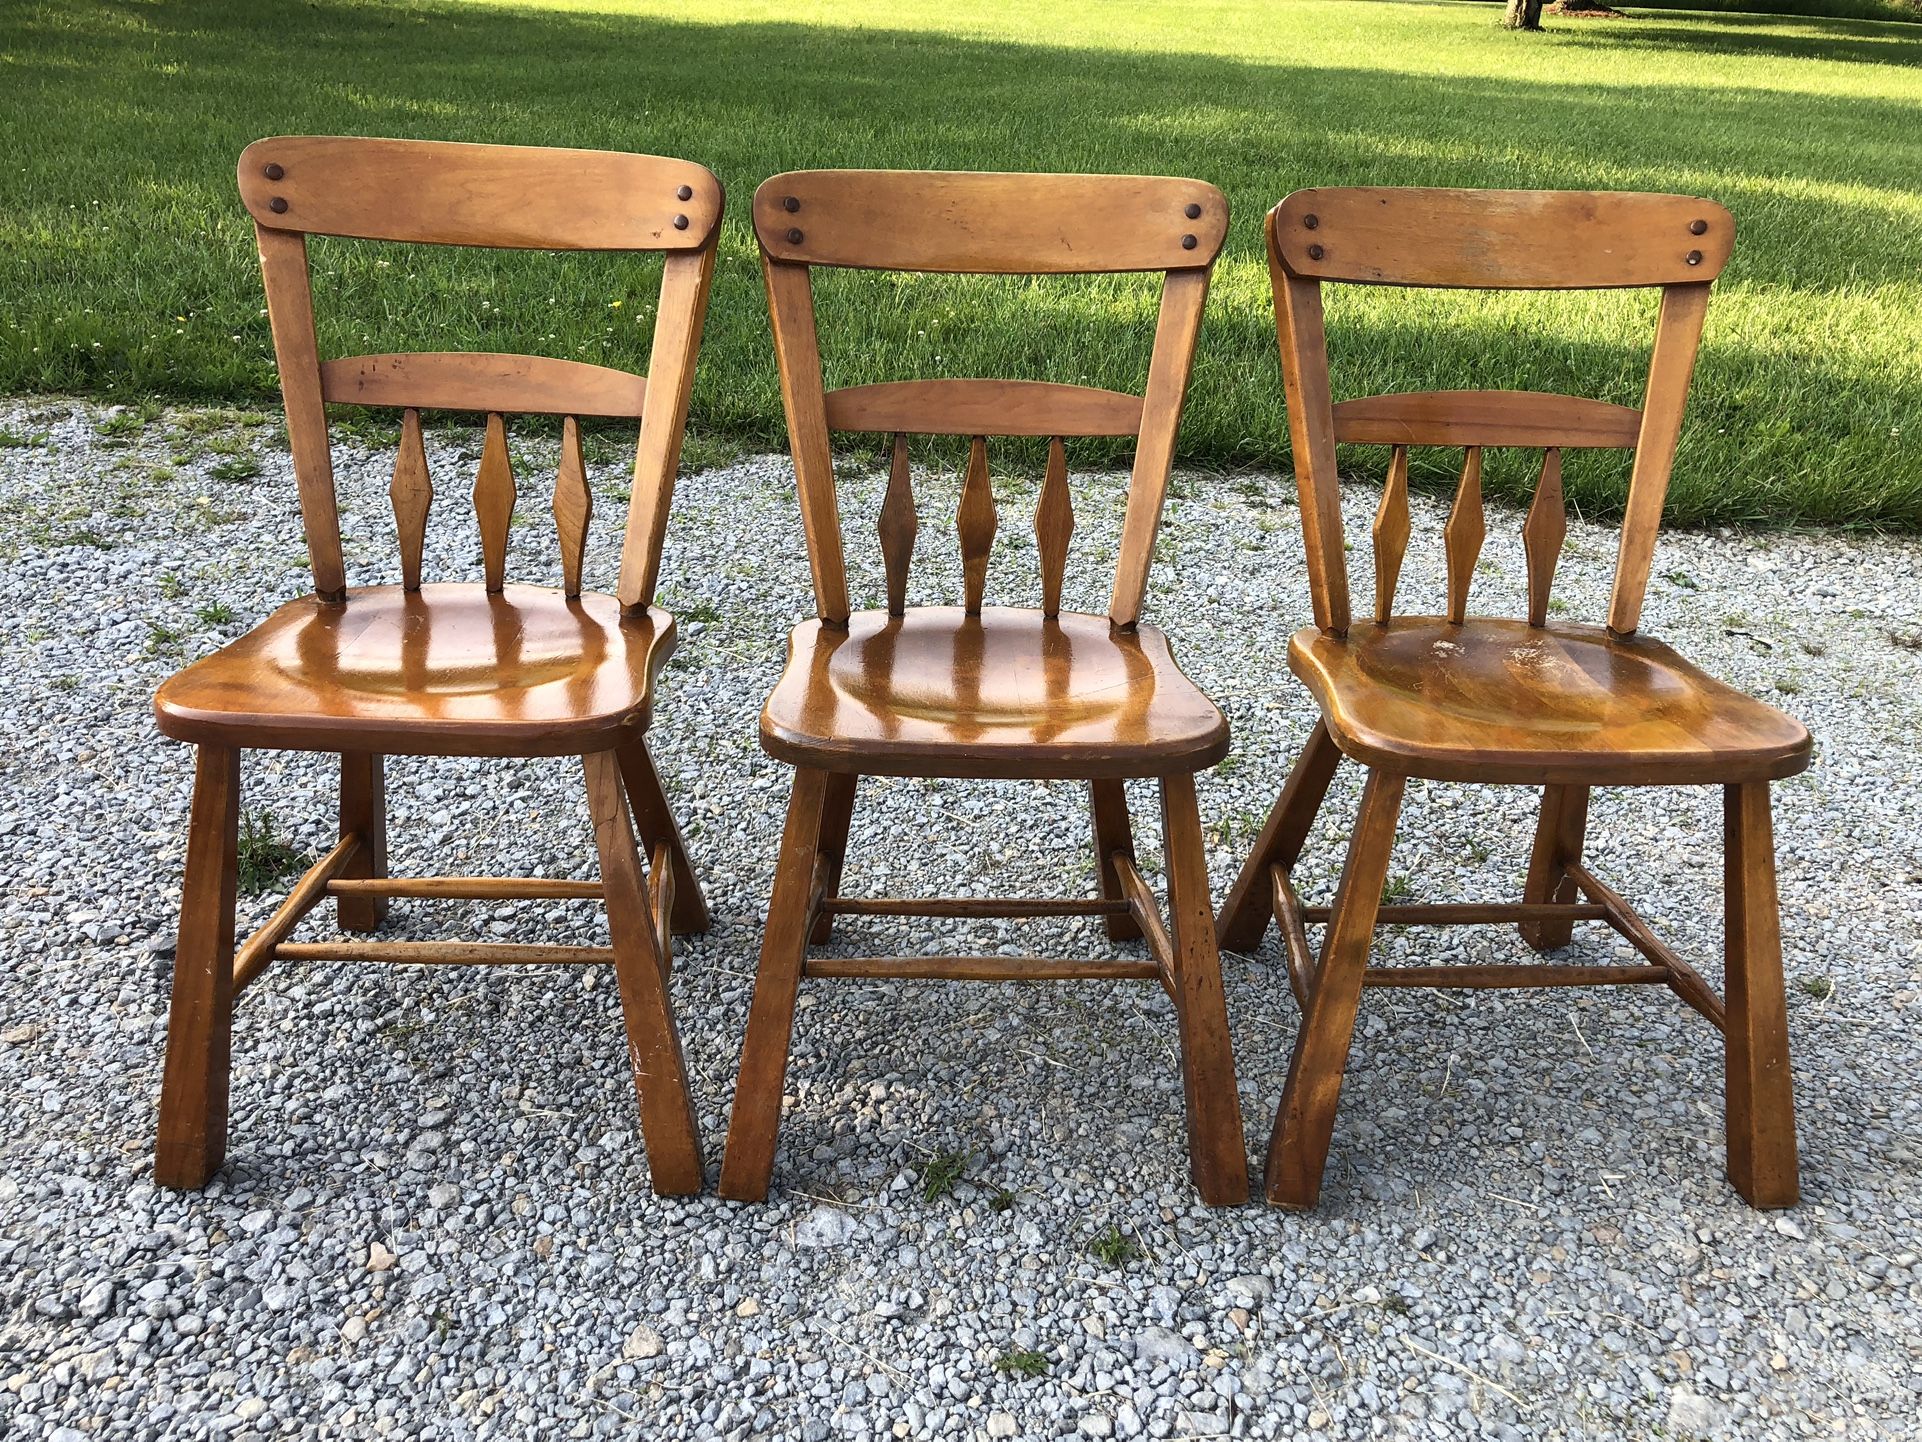 Three Vintage Wood Chairs